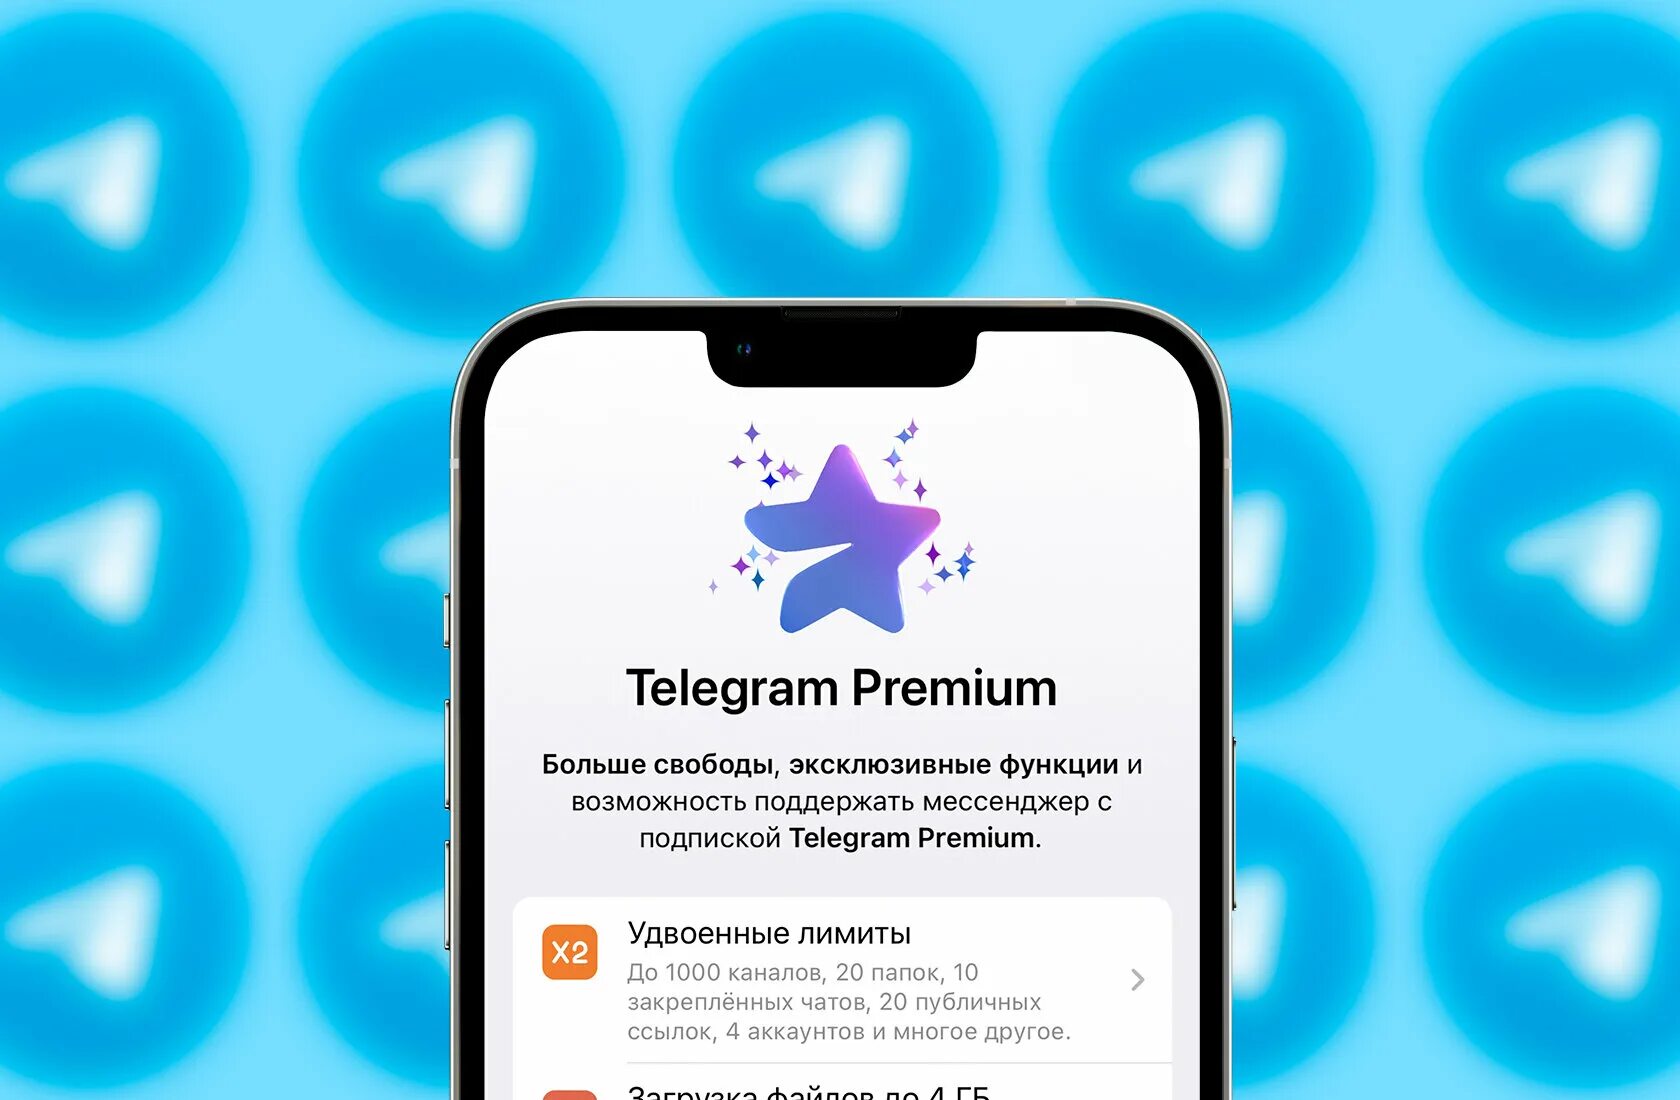 Телеграм Premium. Подписка Telegram Premium. Платная подписка в телеграм. Telegram Premium Premium.